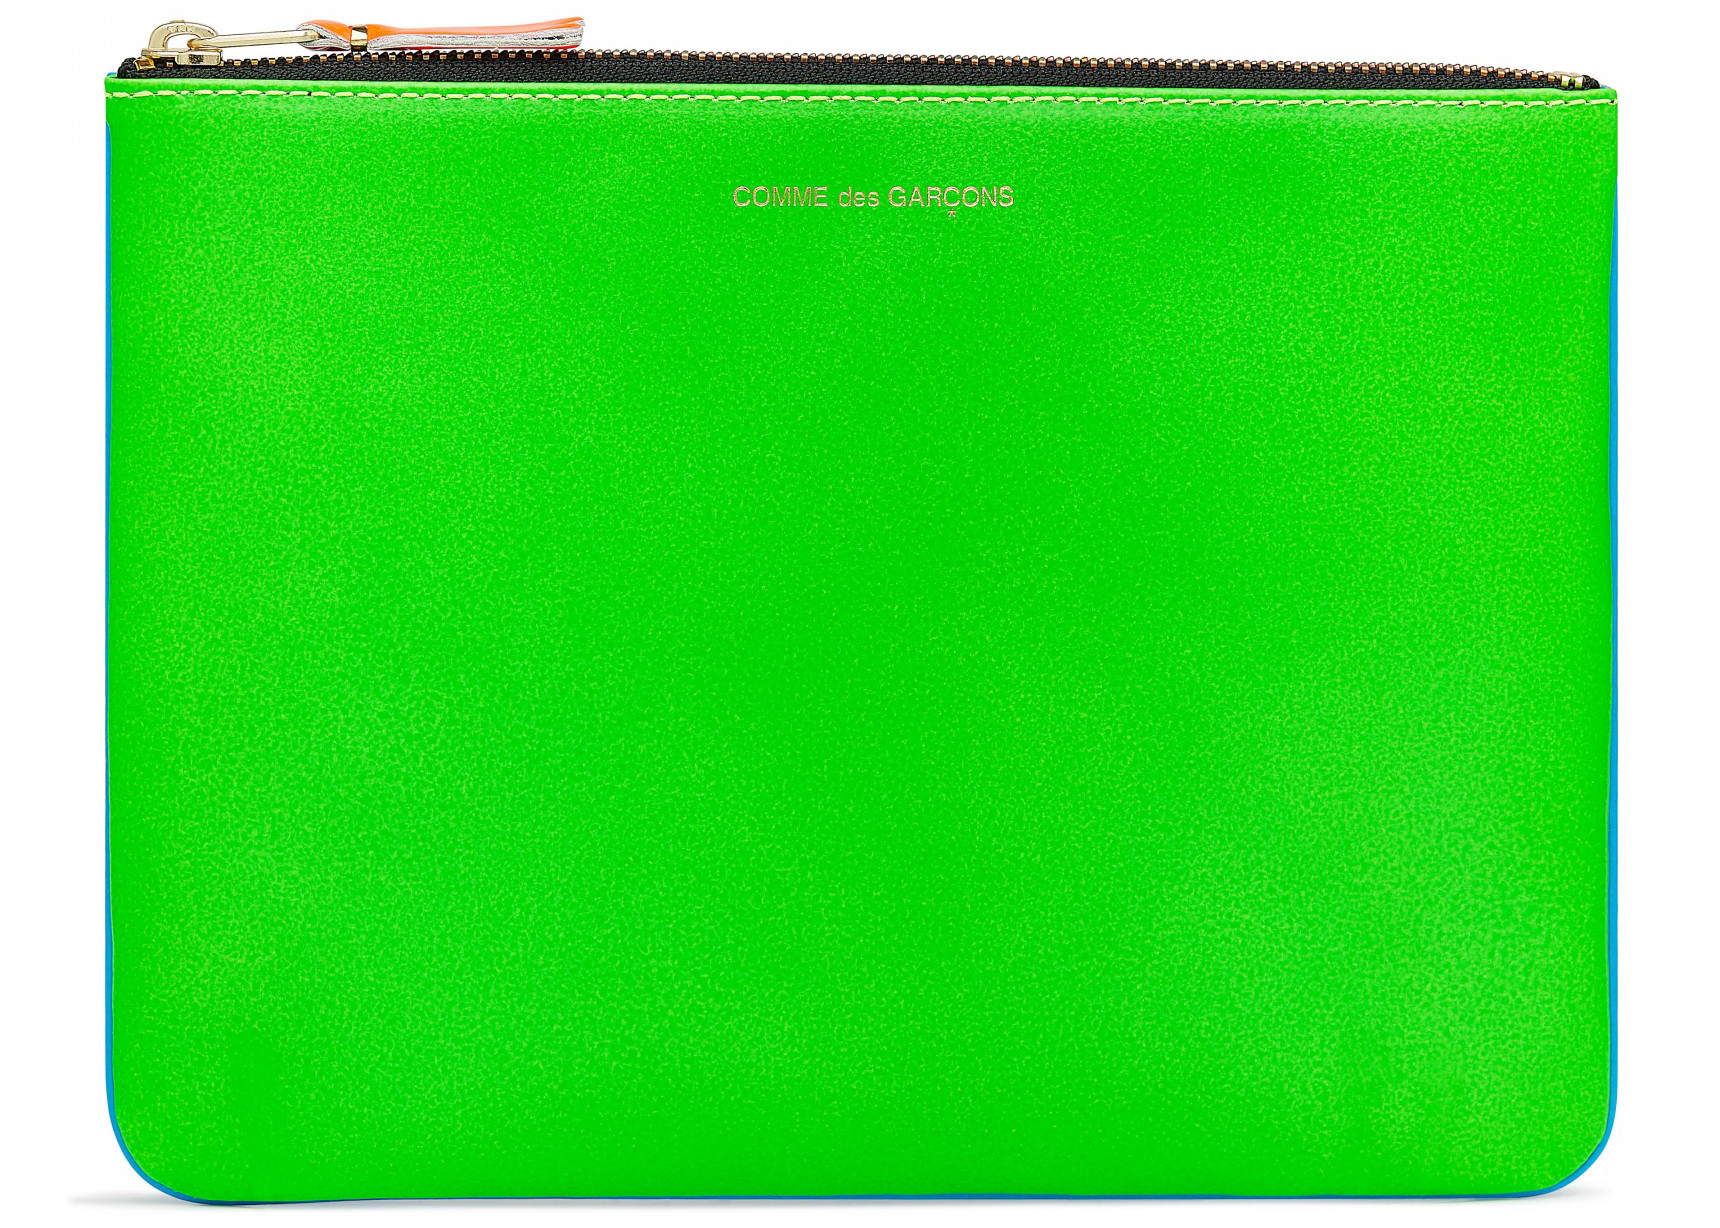 Super Fluo Leather Wallet